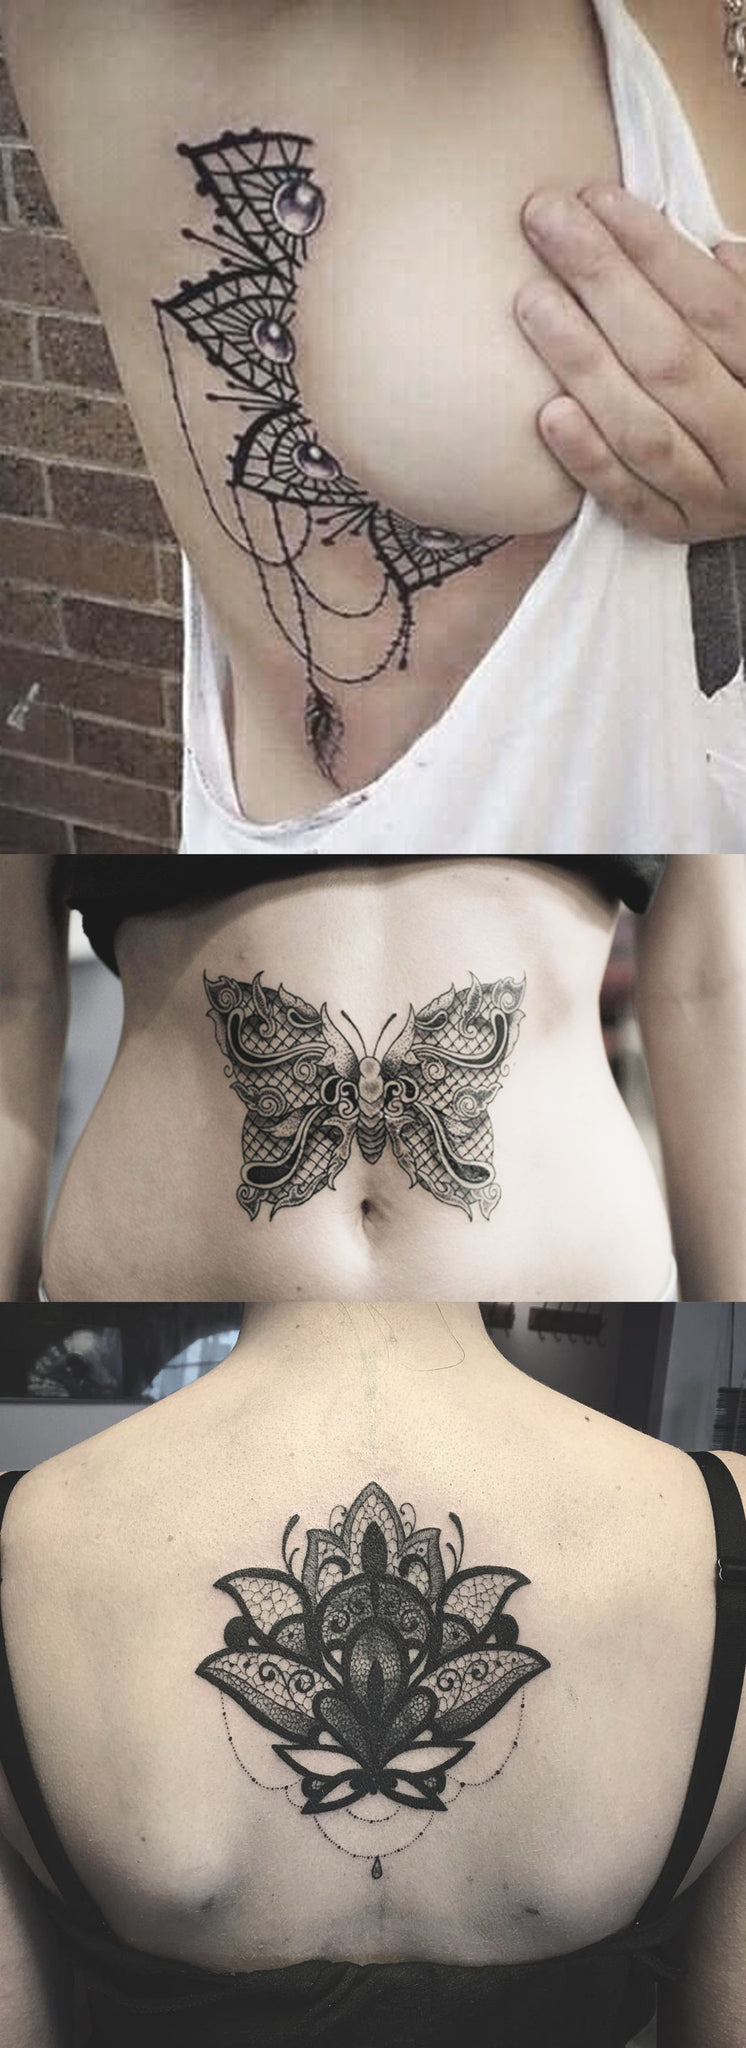 Side Boob Lace Chandelier Tattoo Ideas at MyBodiArt.com - Butterfly Stomach Tat for Women - Lotus Spine Back Tatt